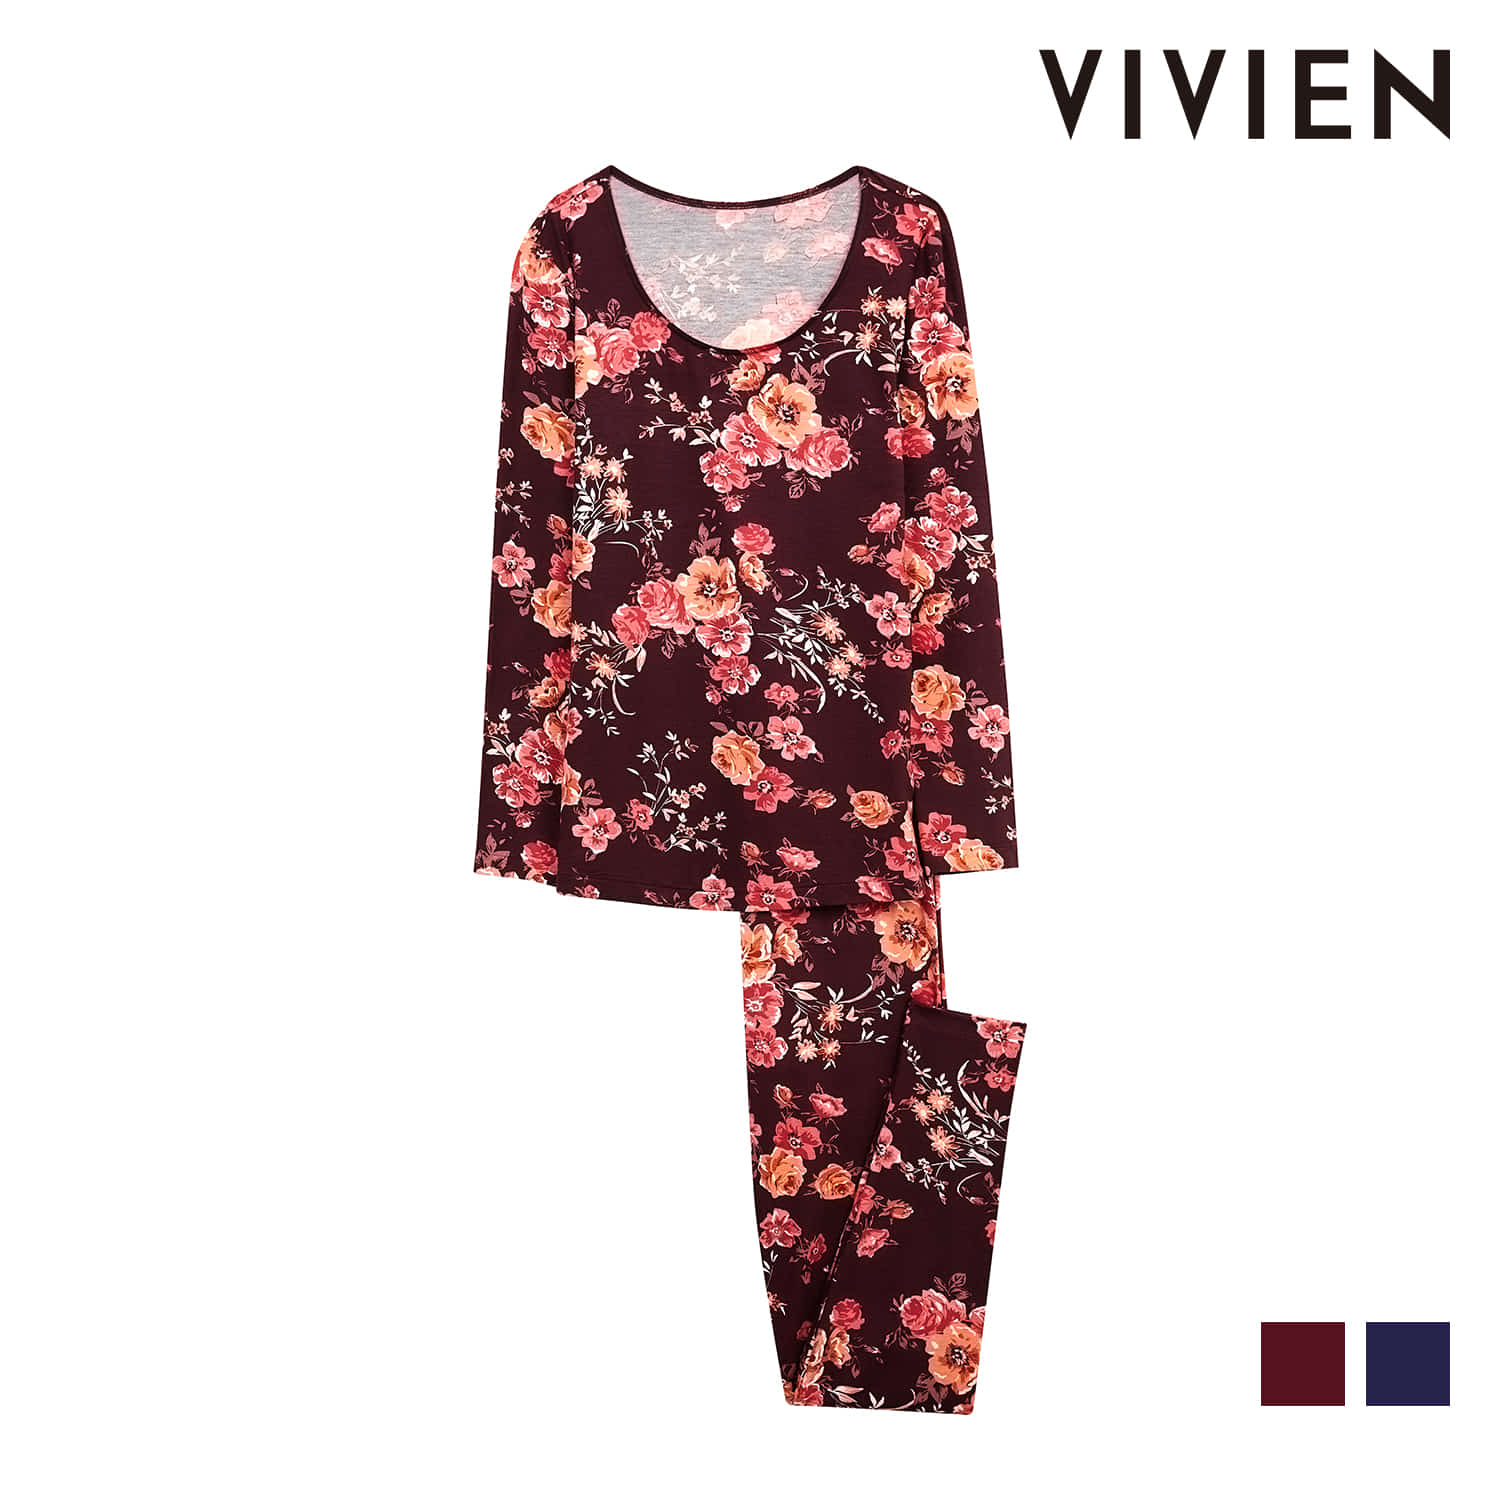 VIVIEN 비비안 여자속옷 텐셀 플라워 프린트 동내의세트 LG9133S